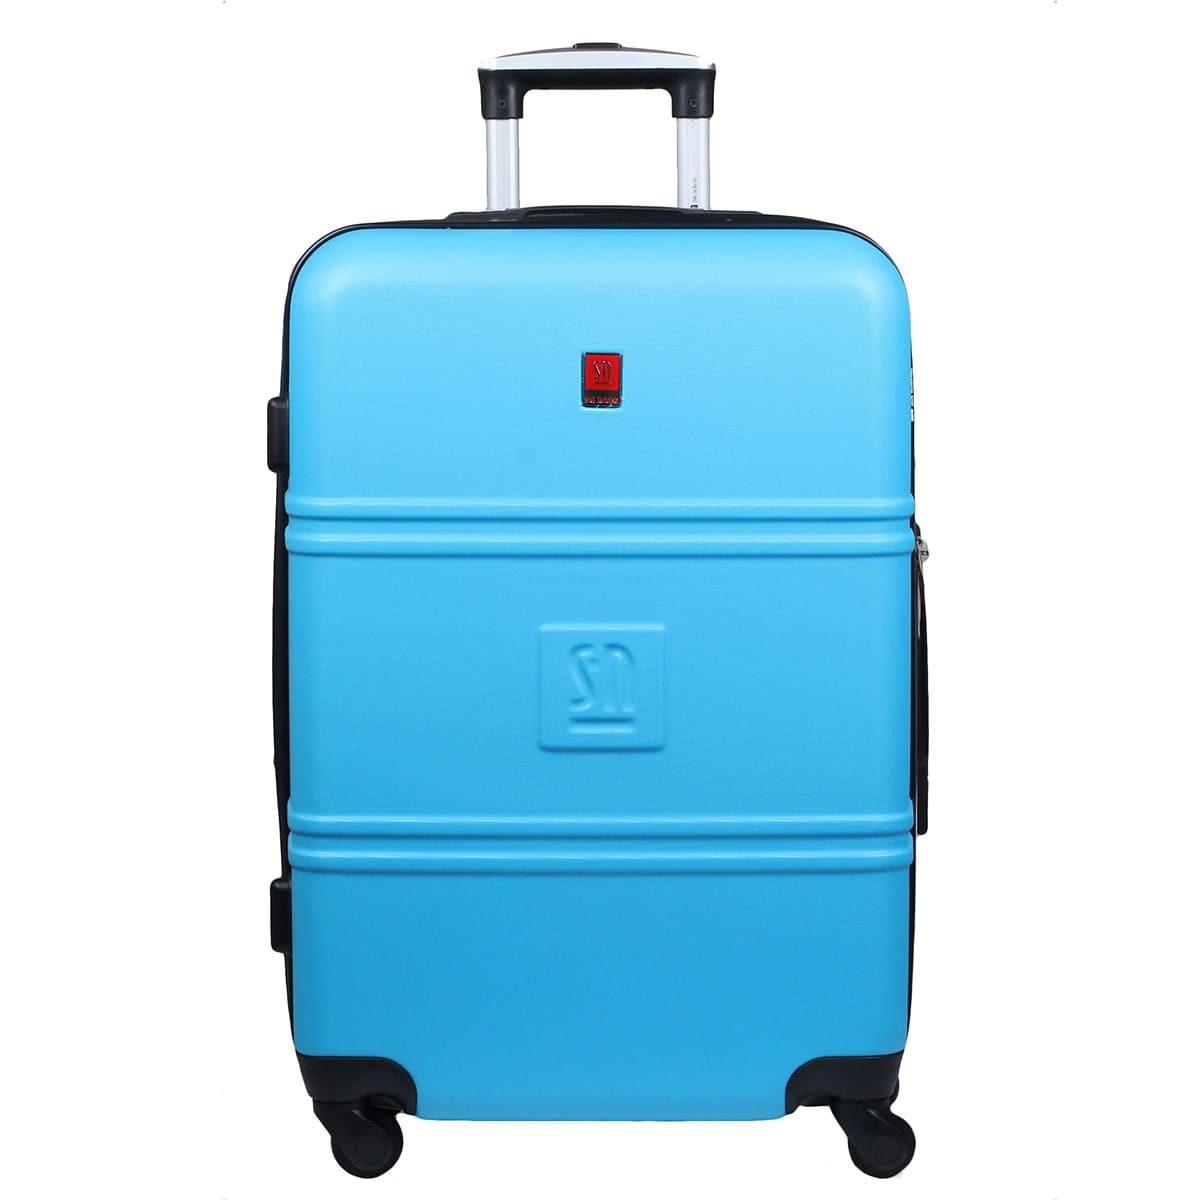 niebieska-walizka-podrozna-srednia-na-kolkach-Art-Class-04-0411O-28.jpg